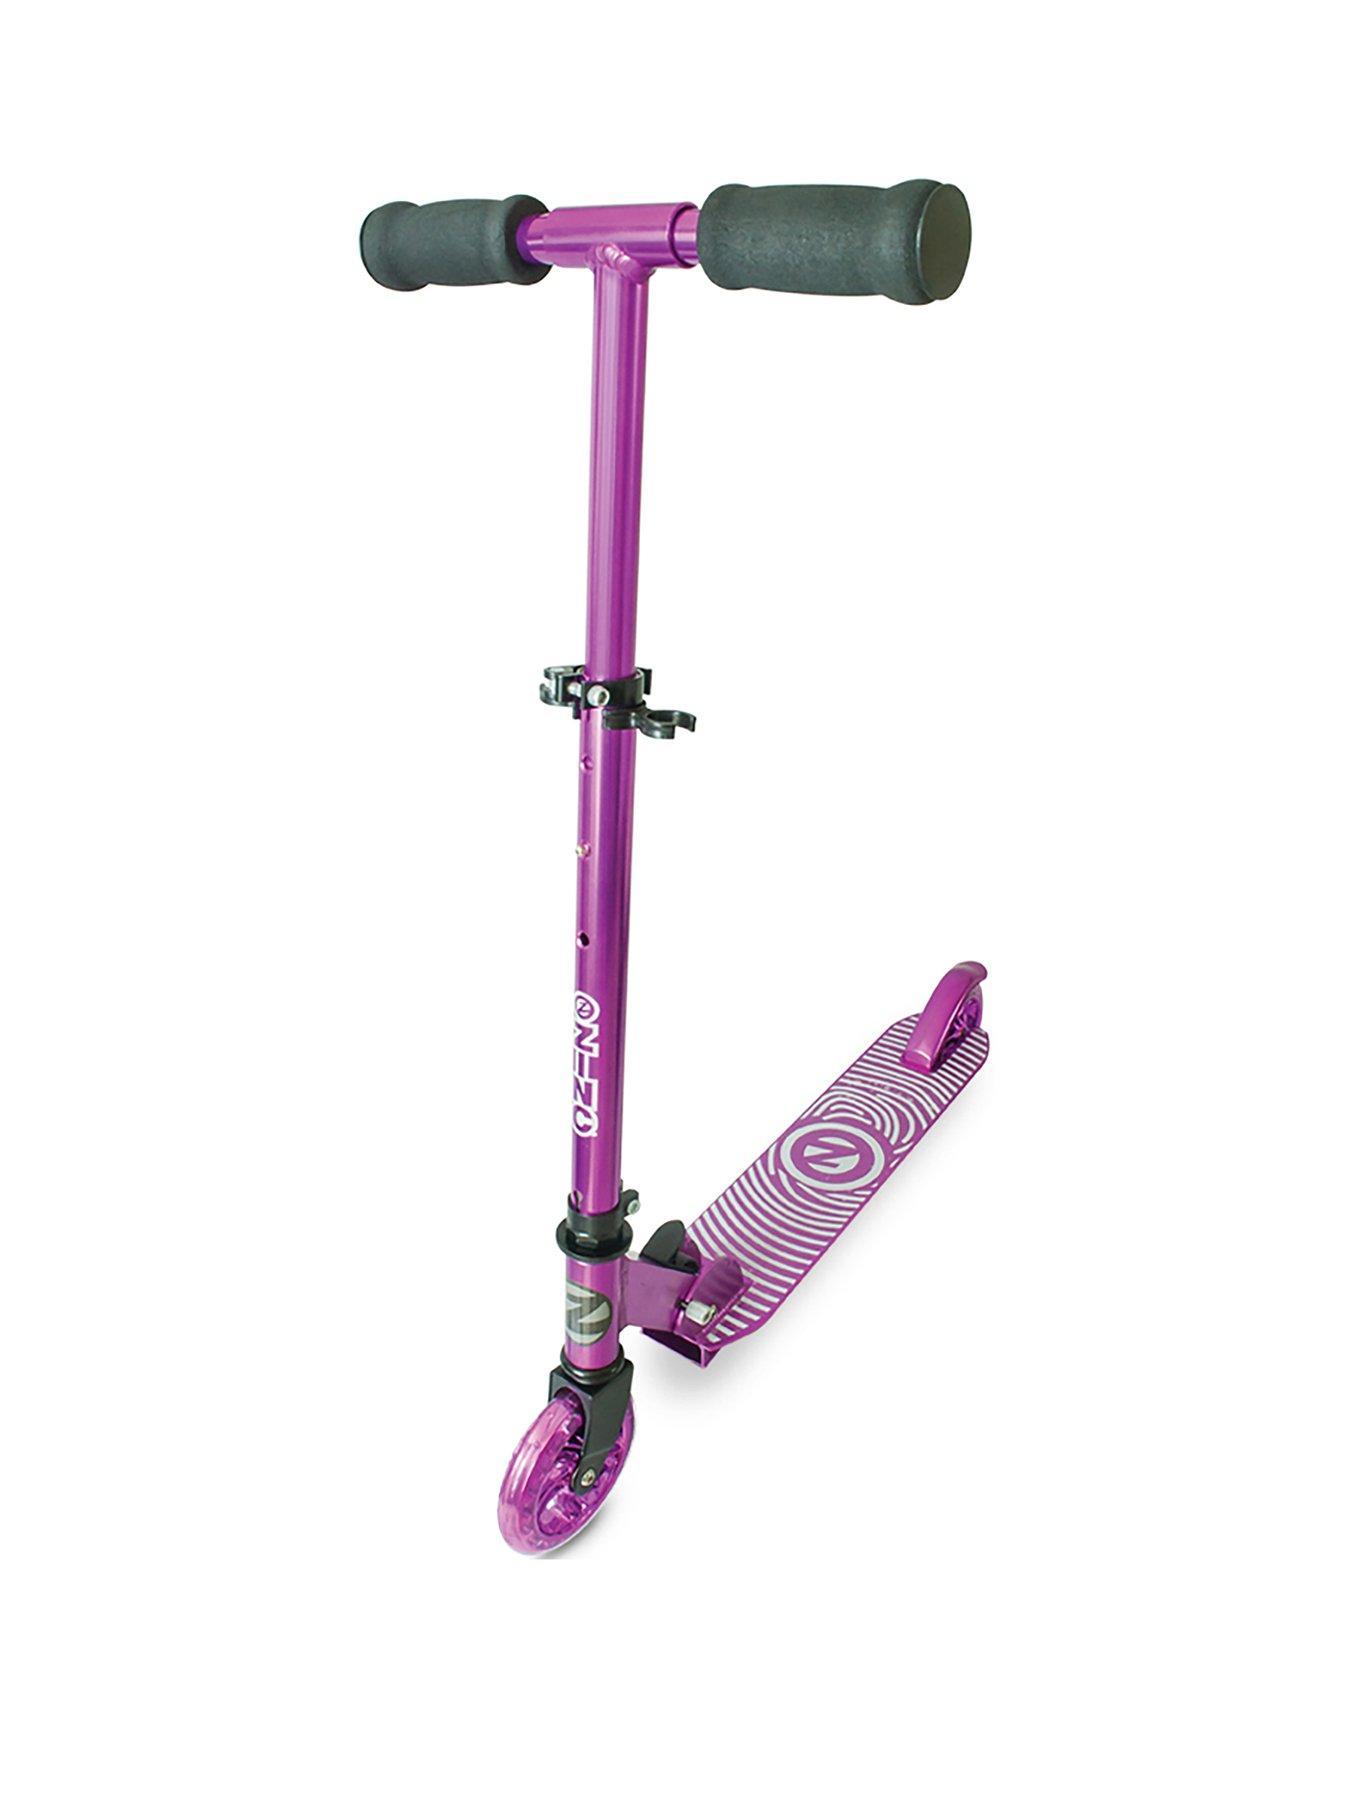 pink unicorn scooter